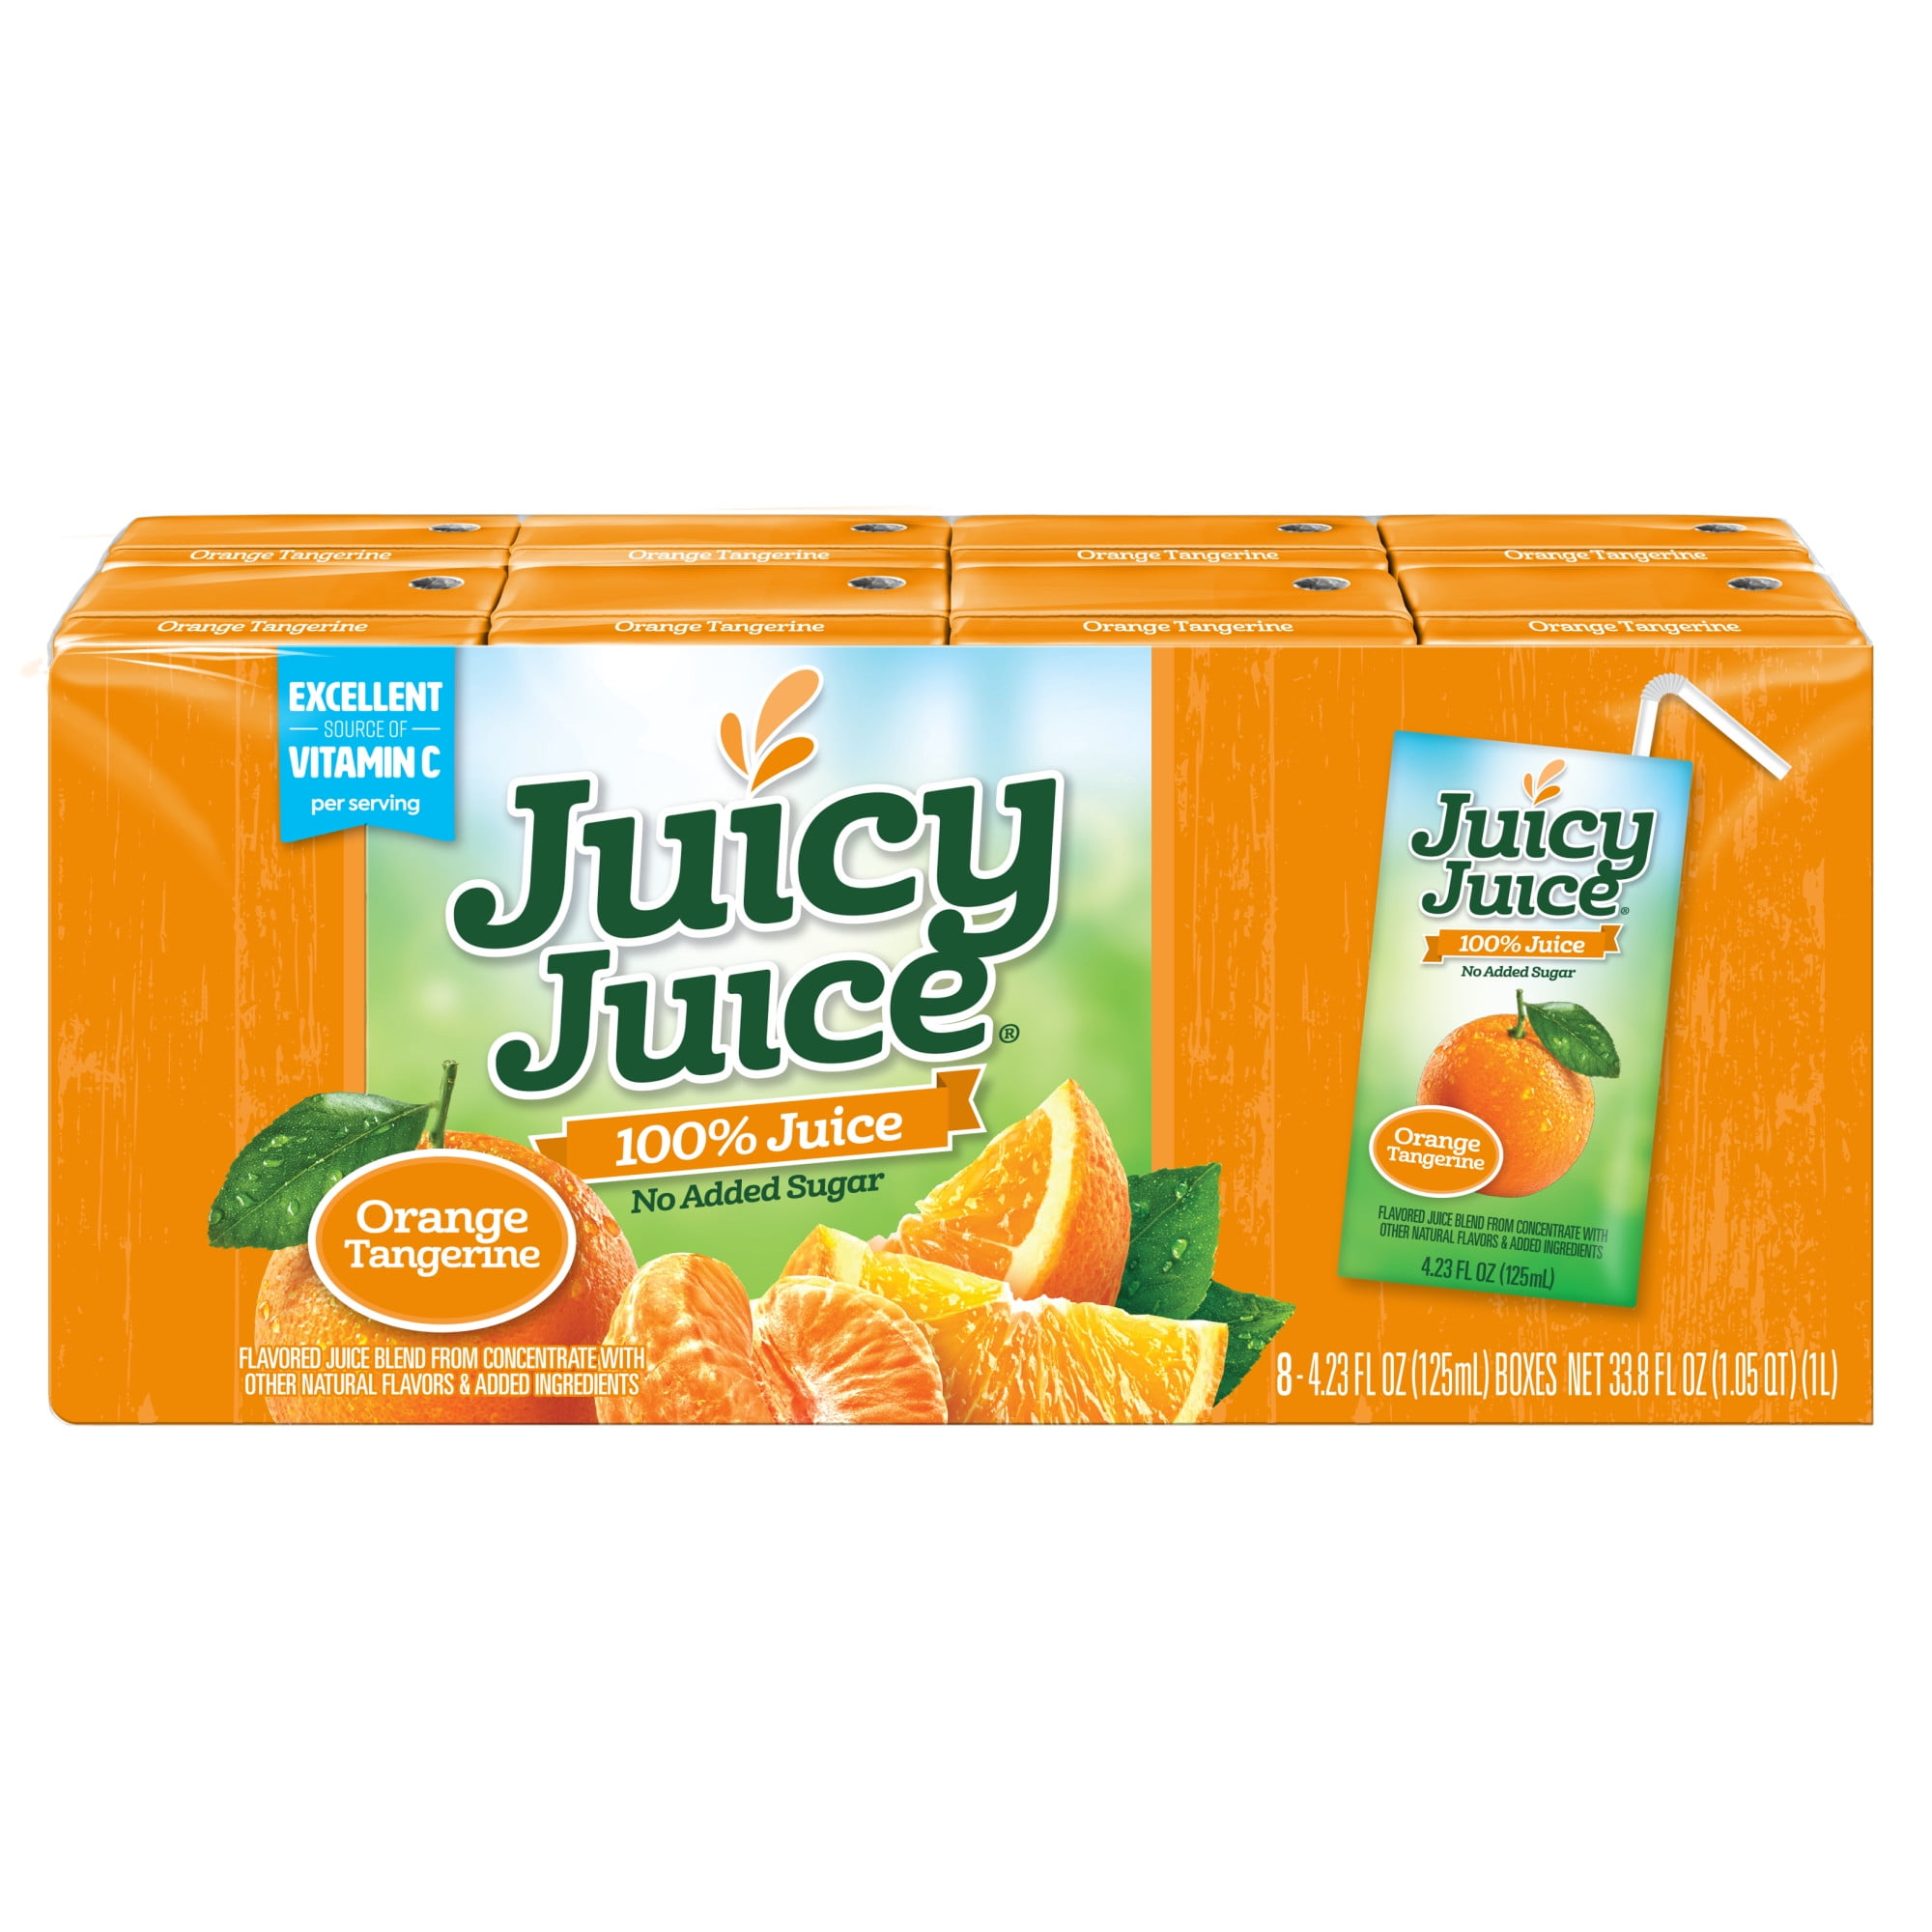 Juicy Juice 100% Juice, Orange Tangerine, 8 Count, 4.23 FL OZ Juice Boxes